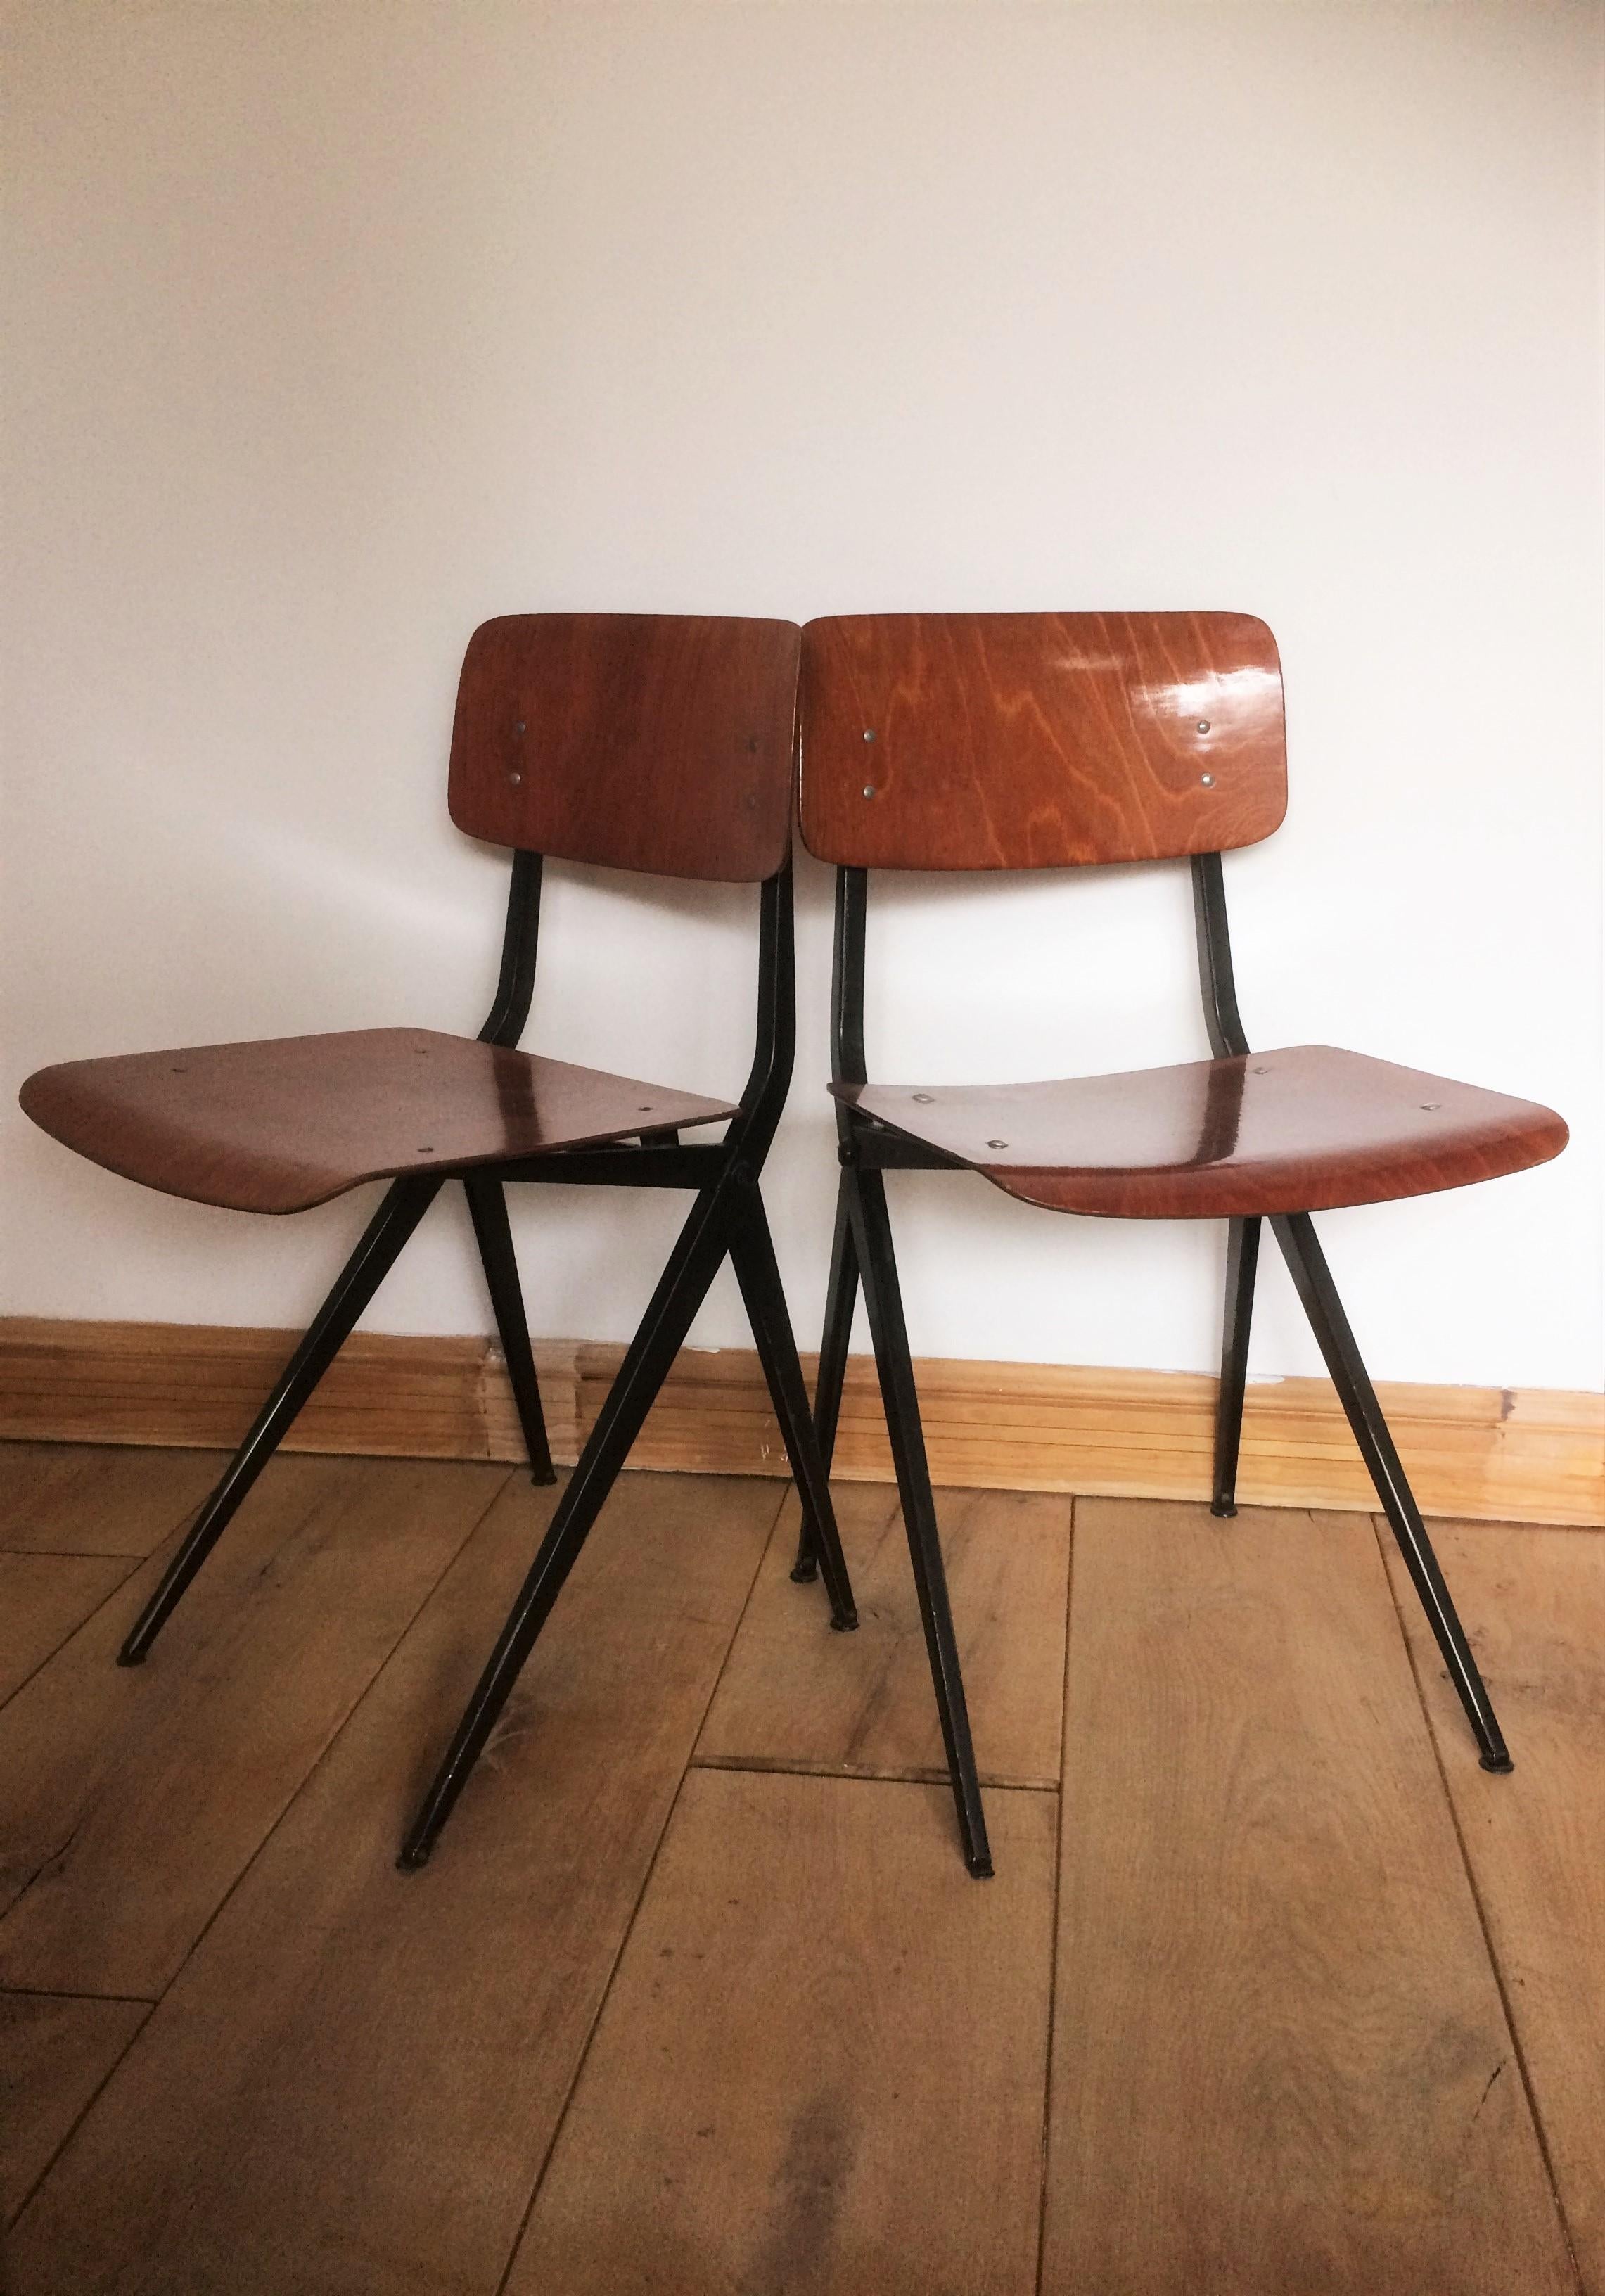 Steel 20th Century Industrial Pagwood Chairs by Ynske Kooistra for Marko, Set of 4